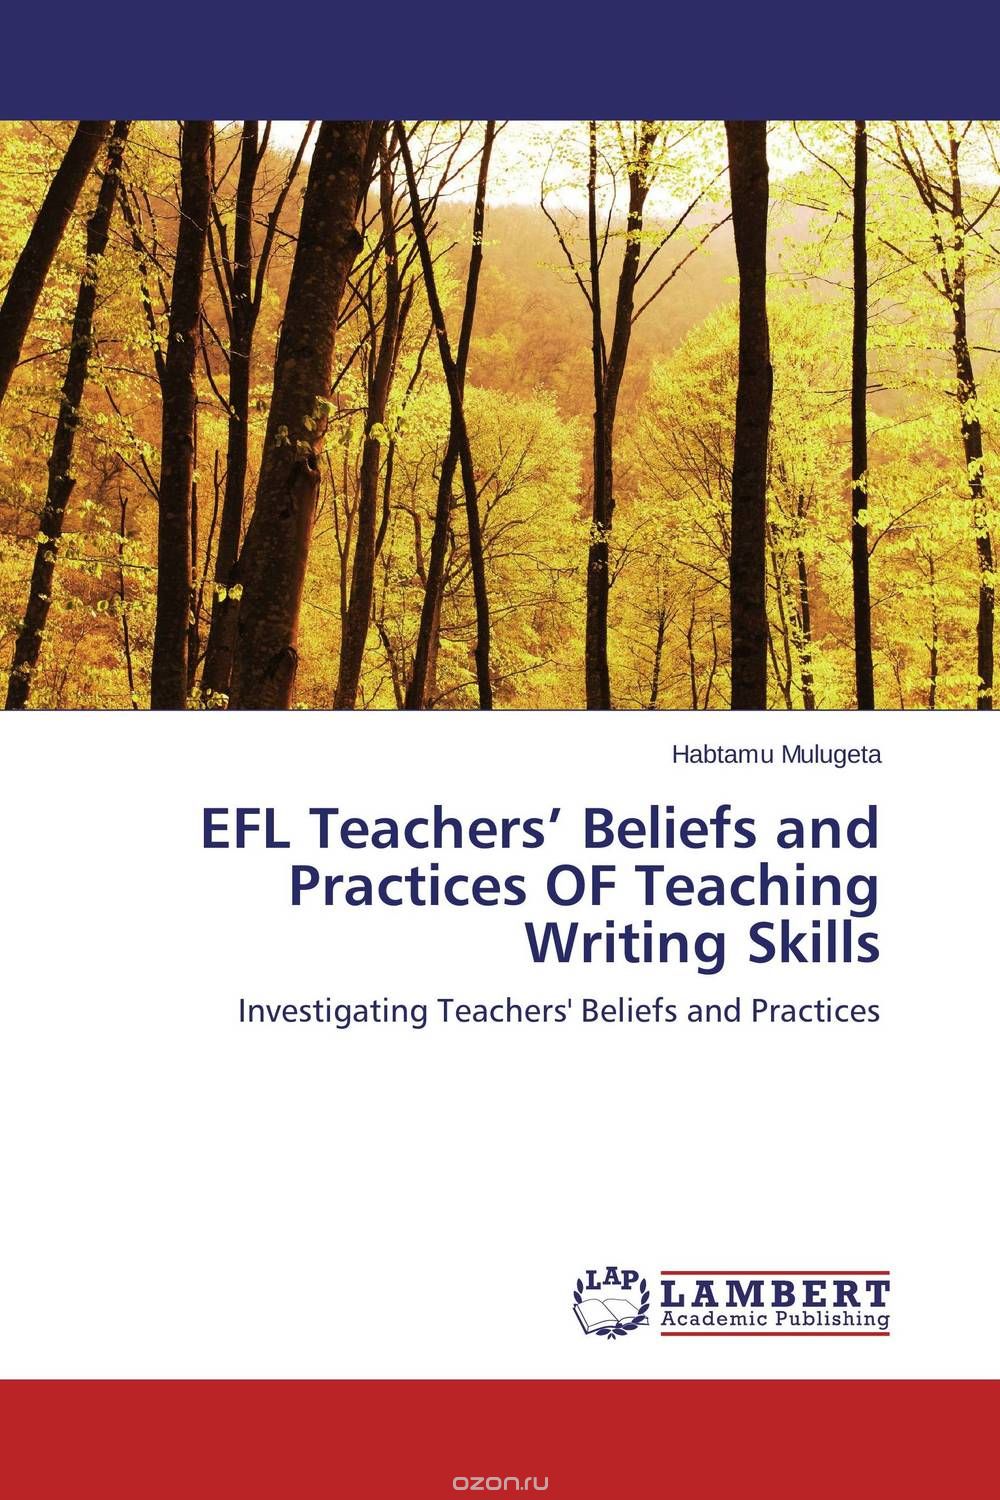 Скачать книгу "EFL Teachers’ Beliefs and Practices OF Teaching Writing Skills"